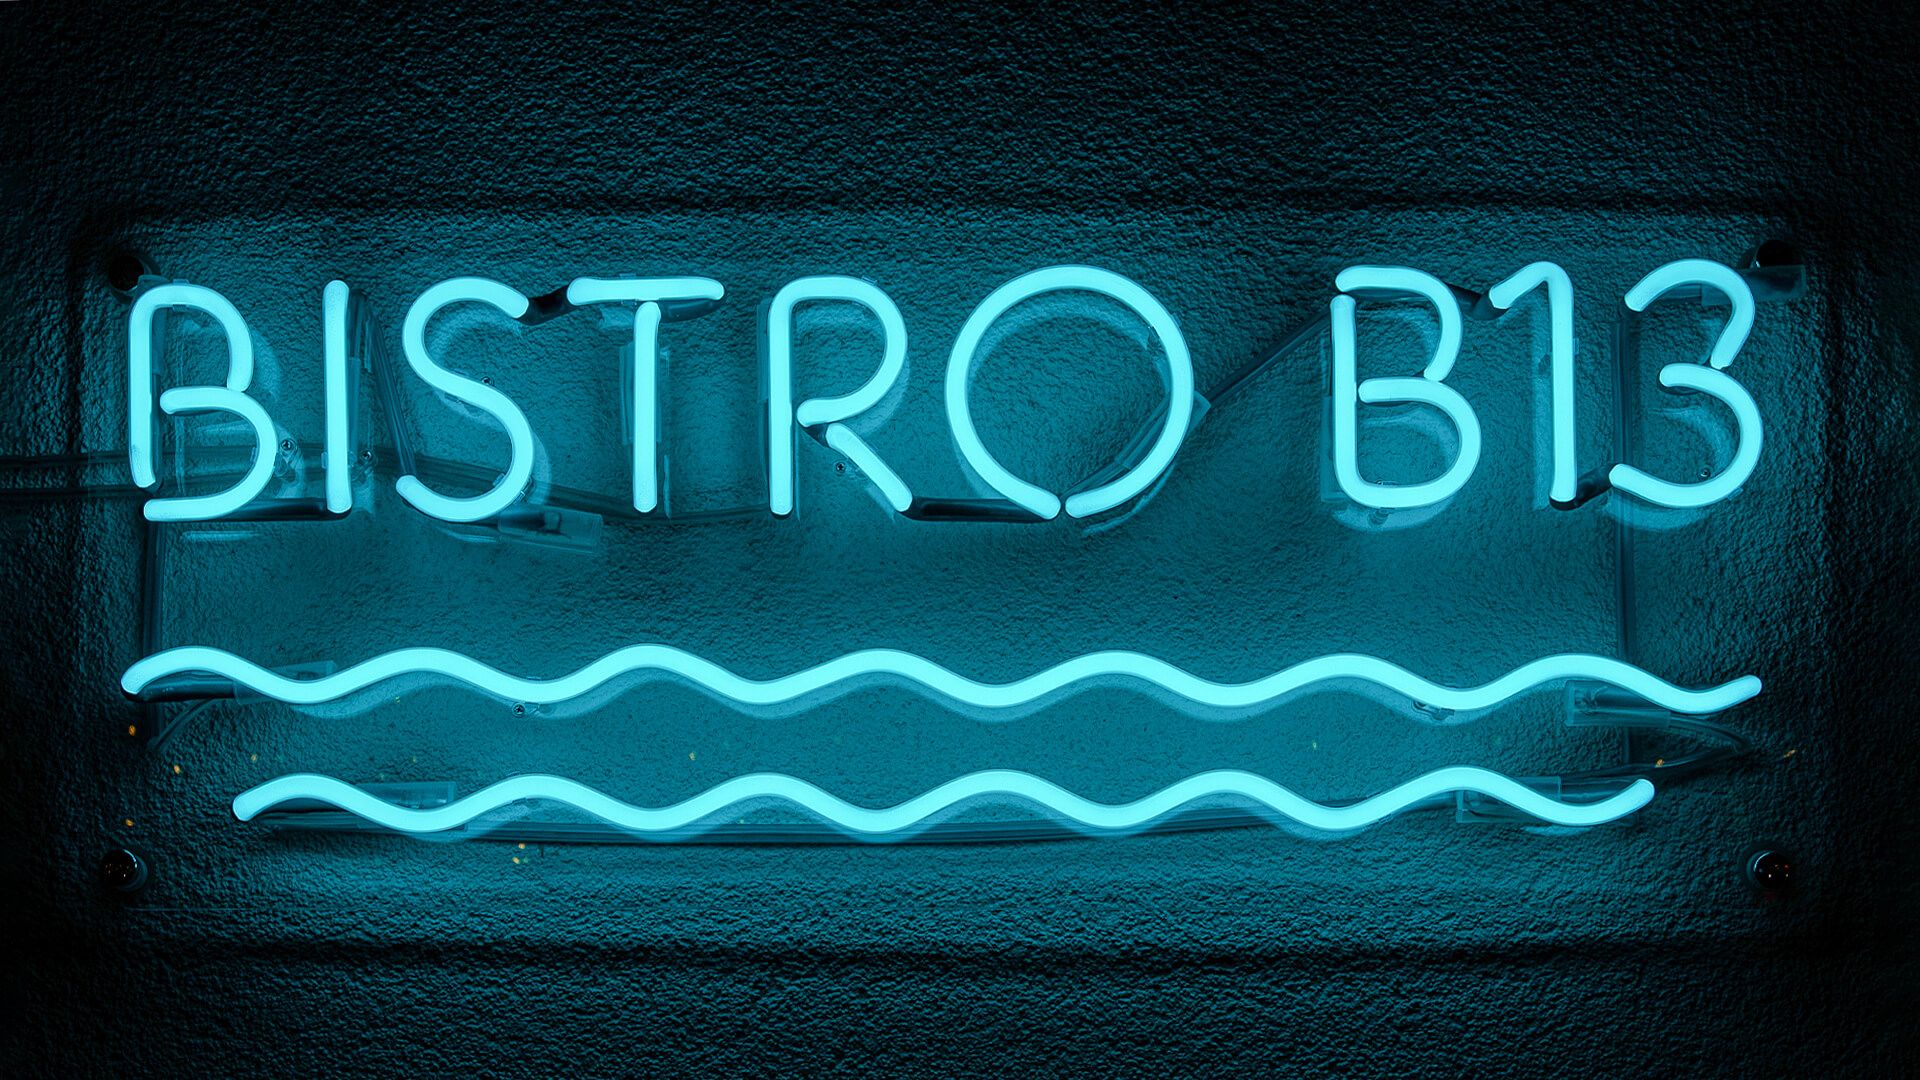 Bistro B13 - Bistro neonglas turquoise.